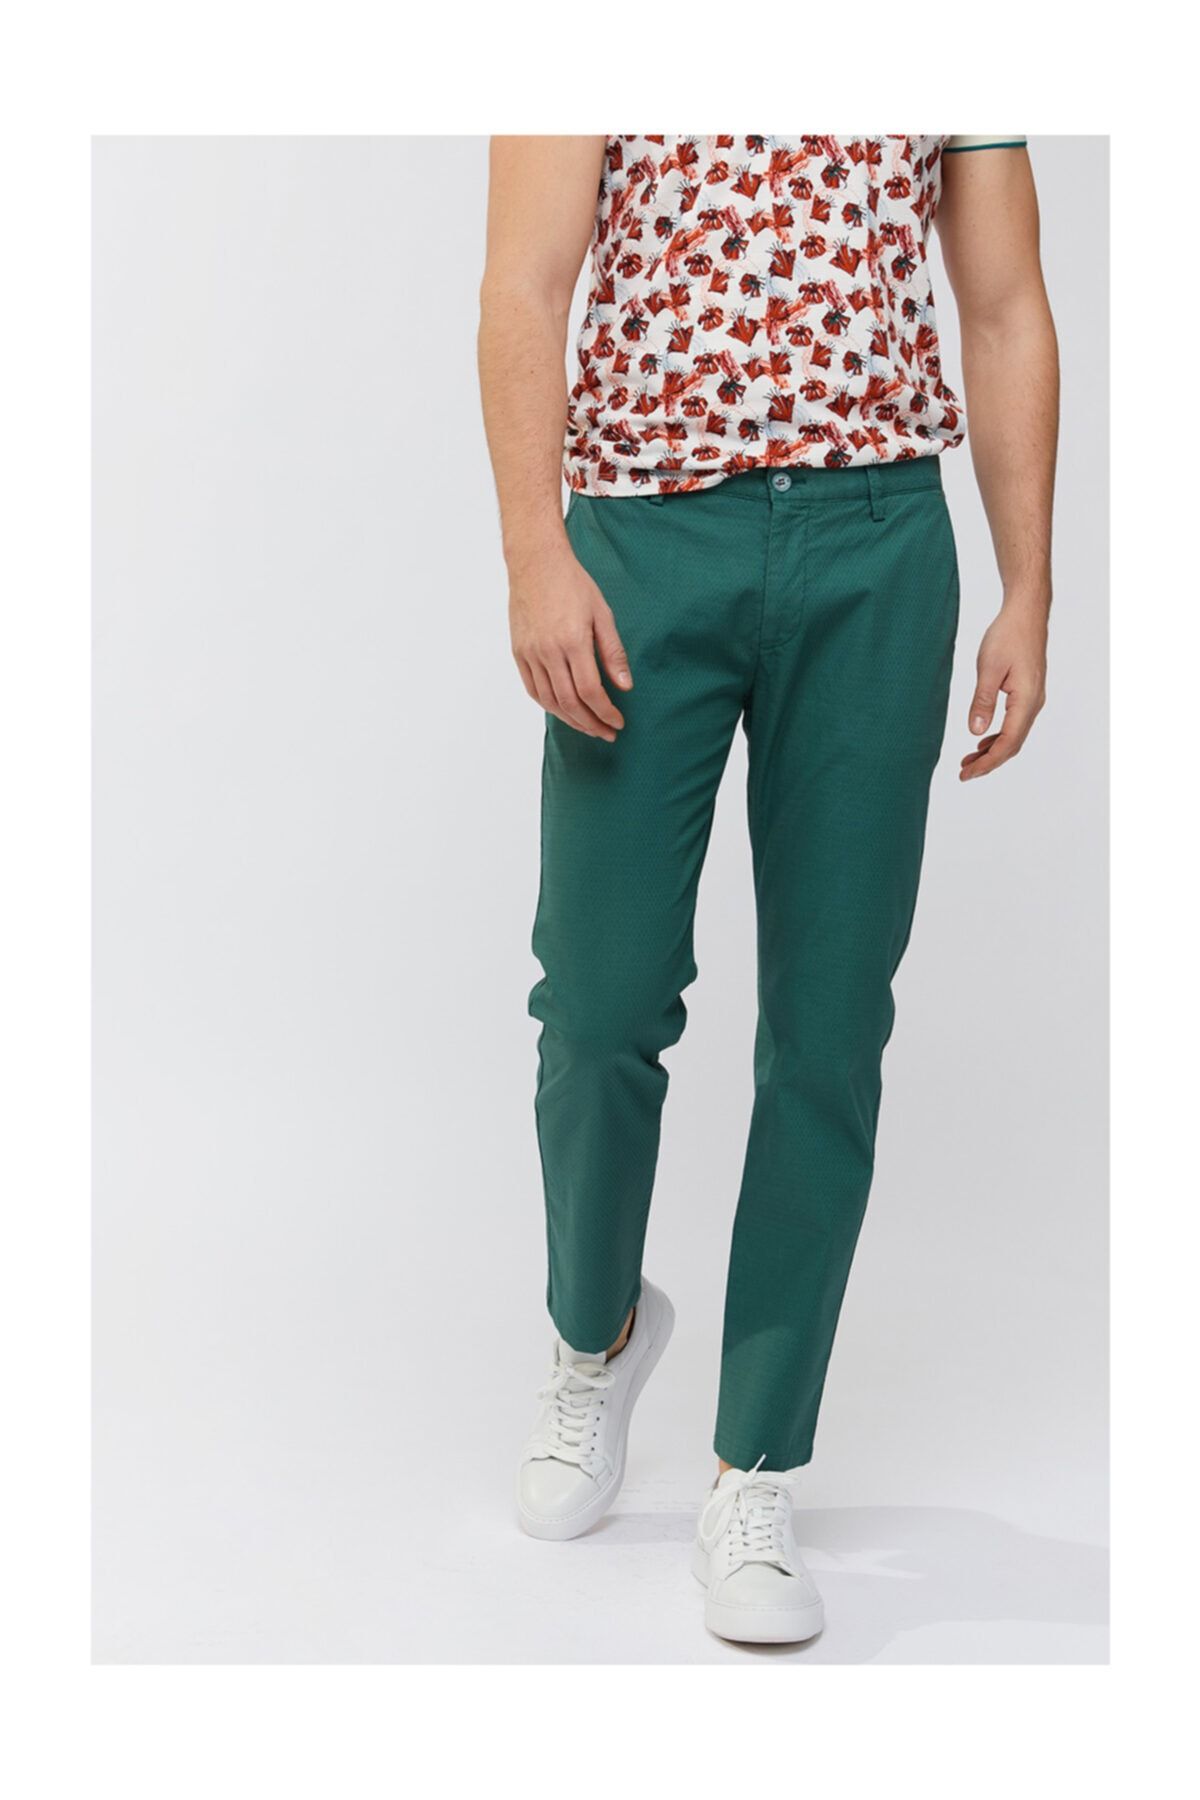 Avva Erkek Yeşil Yandan Cepli Mikro Desenli Slim Fit Pantolon A91y3018